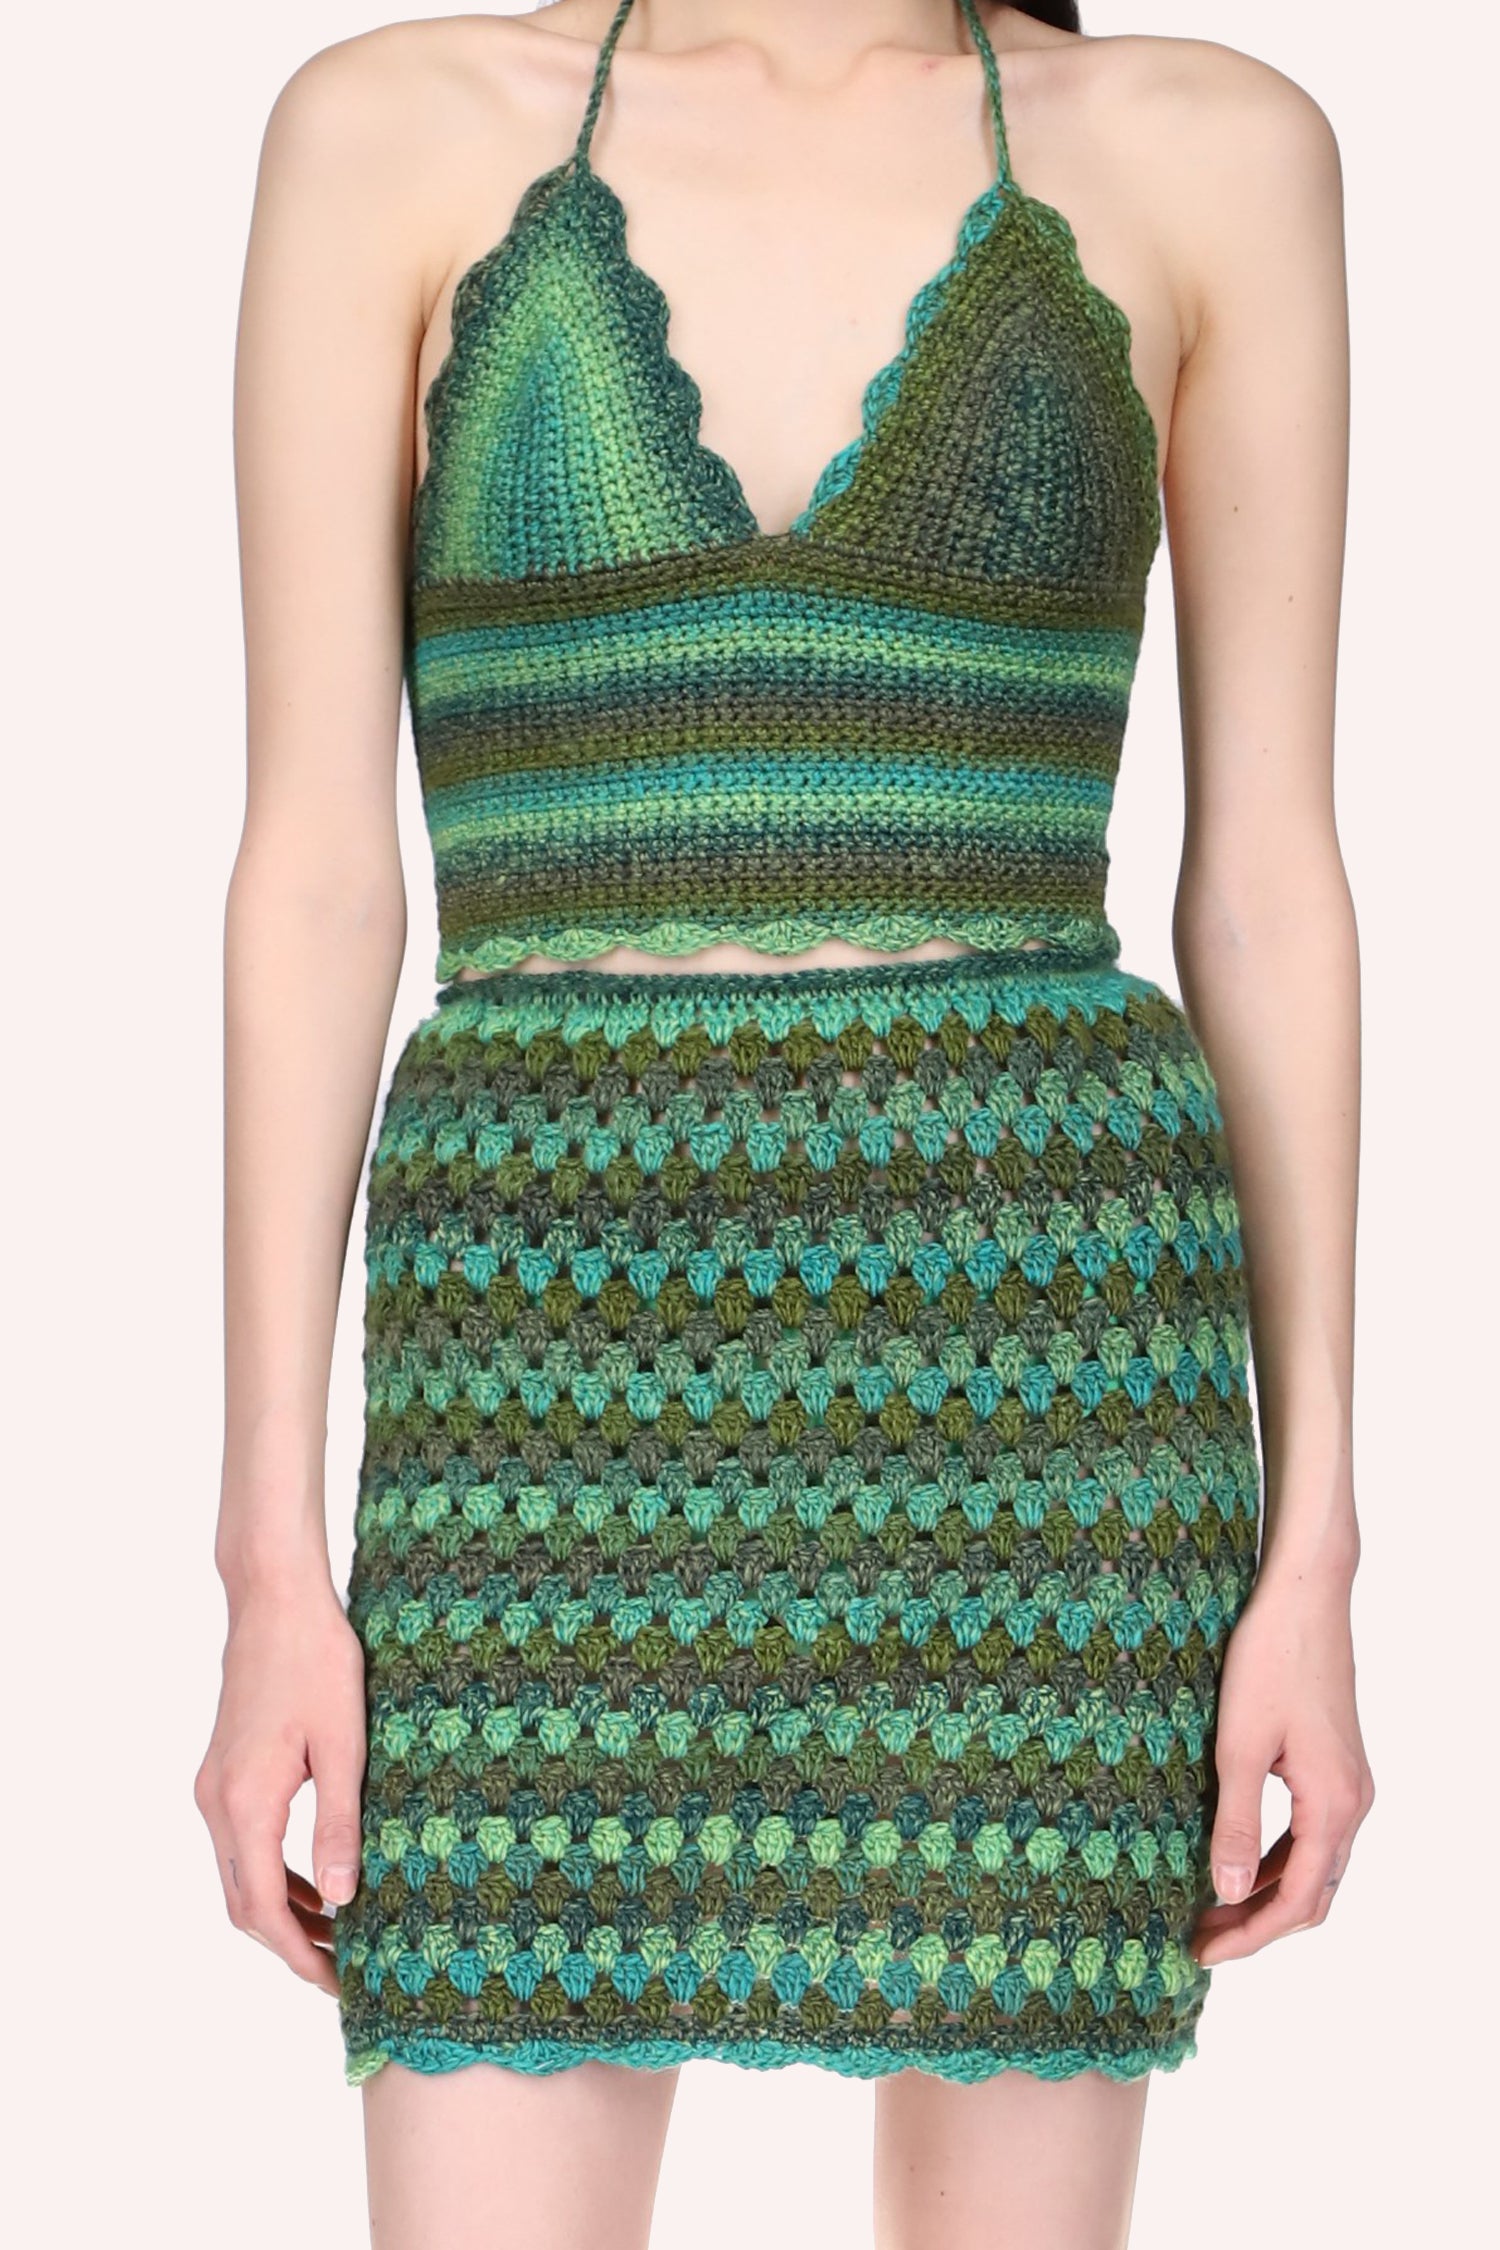 Ombre Hand Crochet Skirt by Konry K<br> Jungle Green - Anna Sui